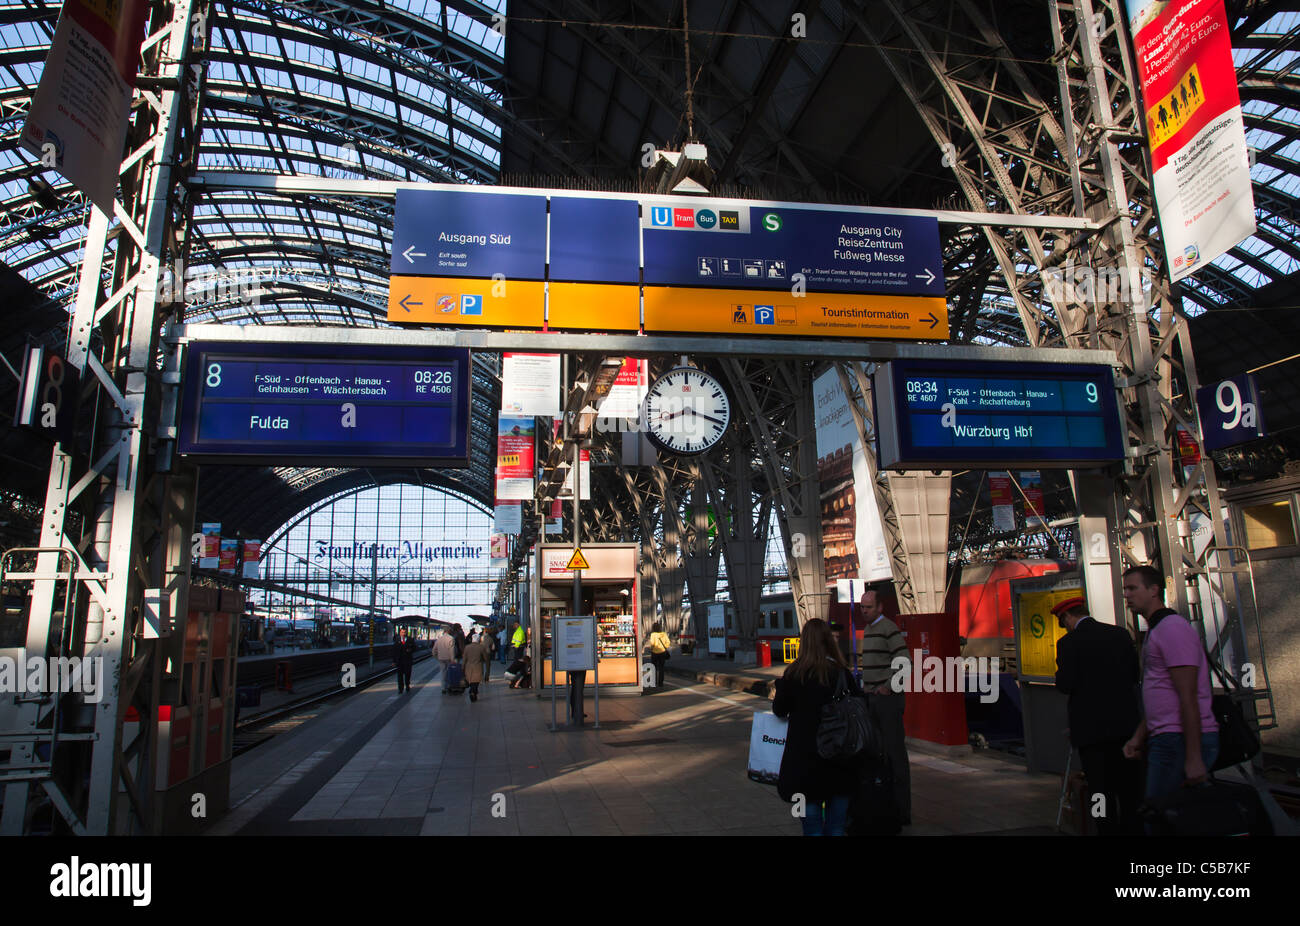 Frankfurt Haubtbahnhof railway station Stock Photo